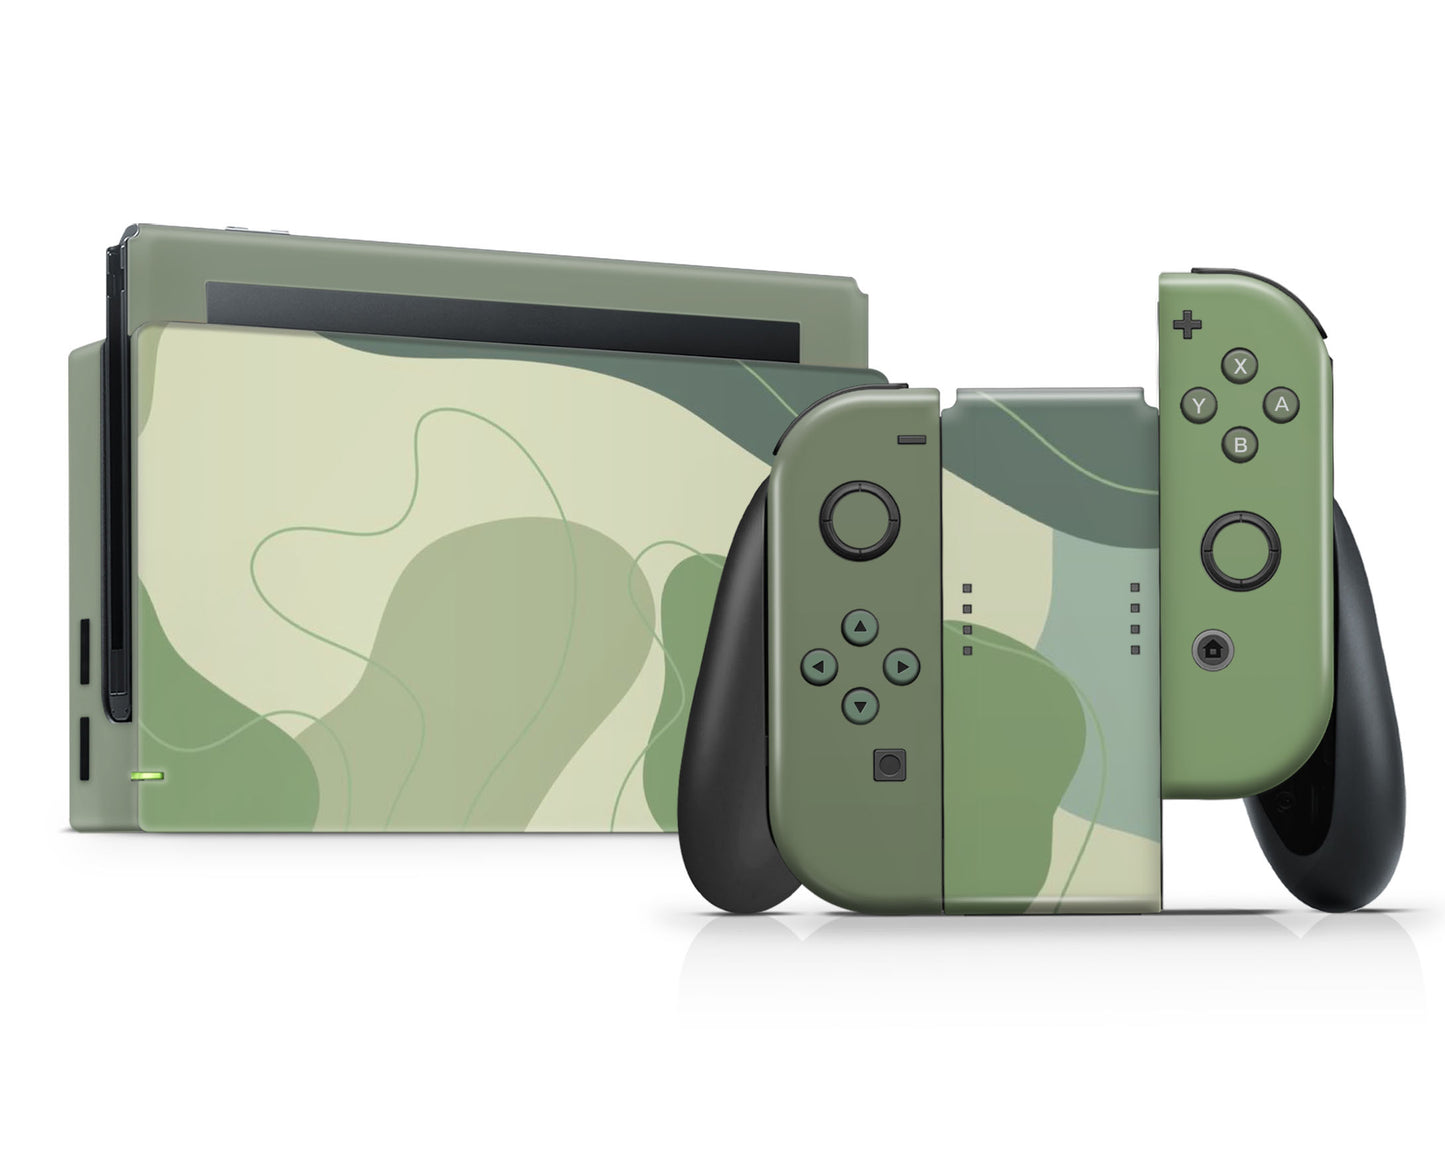 Sage Enchanted Forest Nintendo Switch Skin